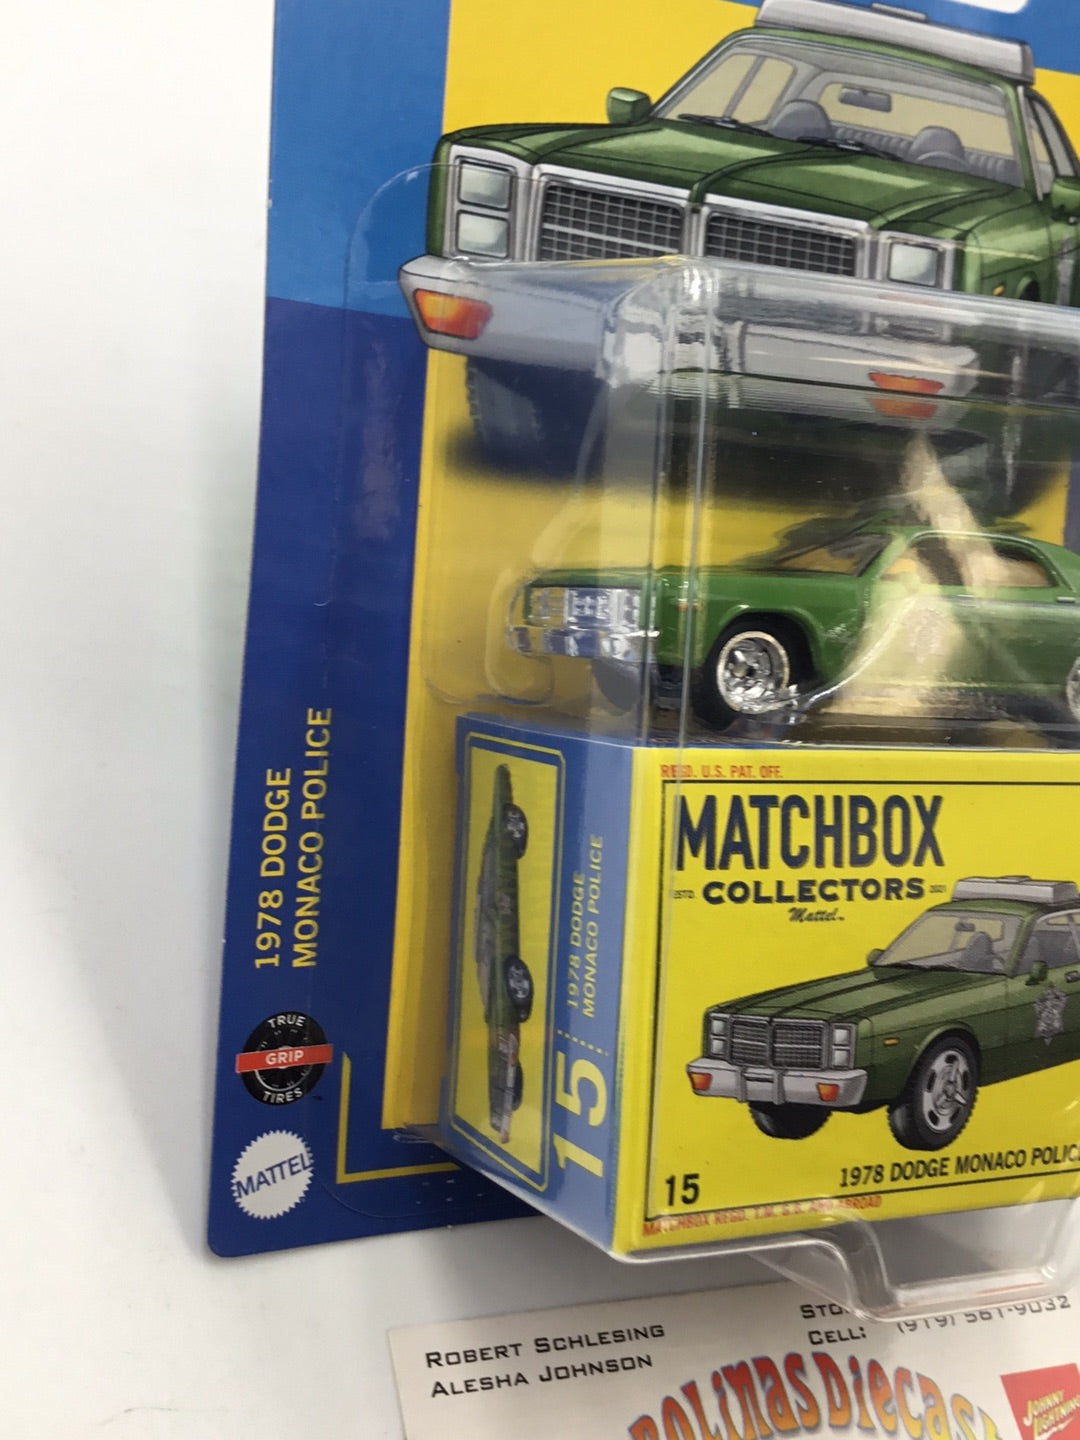 2023 matchbox Collectors #15 1978 Dodge Monoco Police Car 15/22